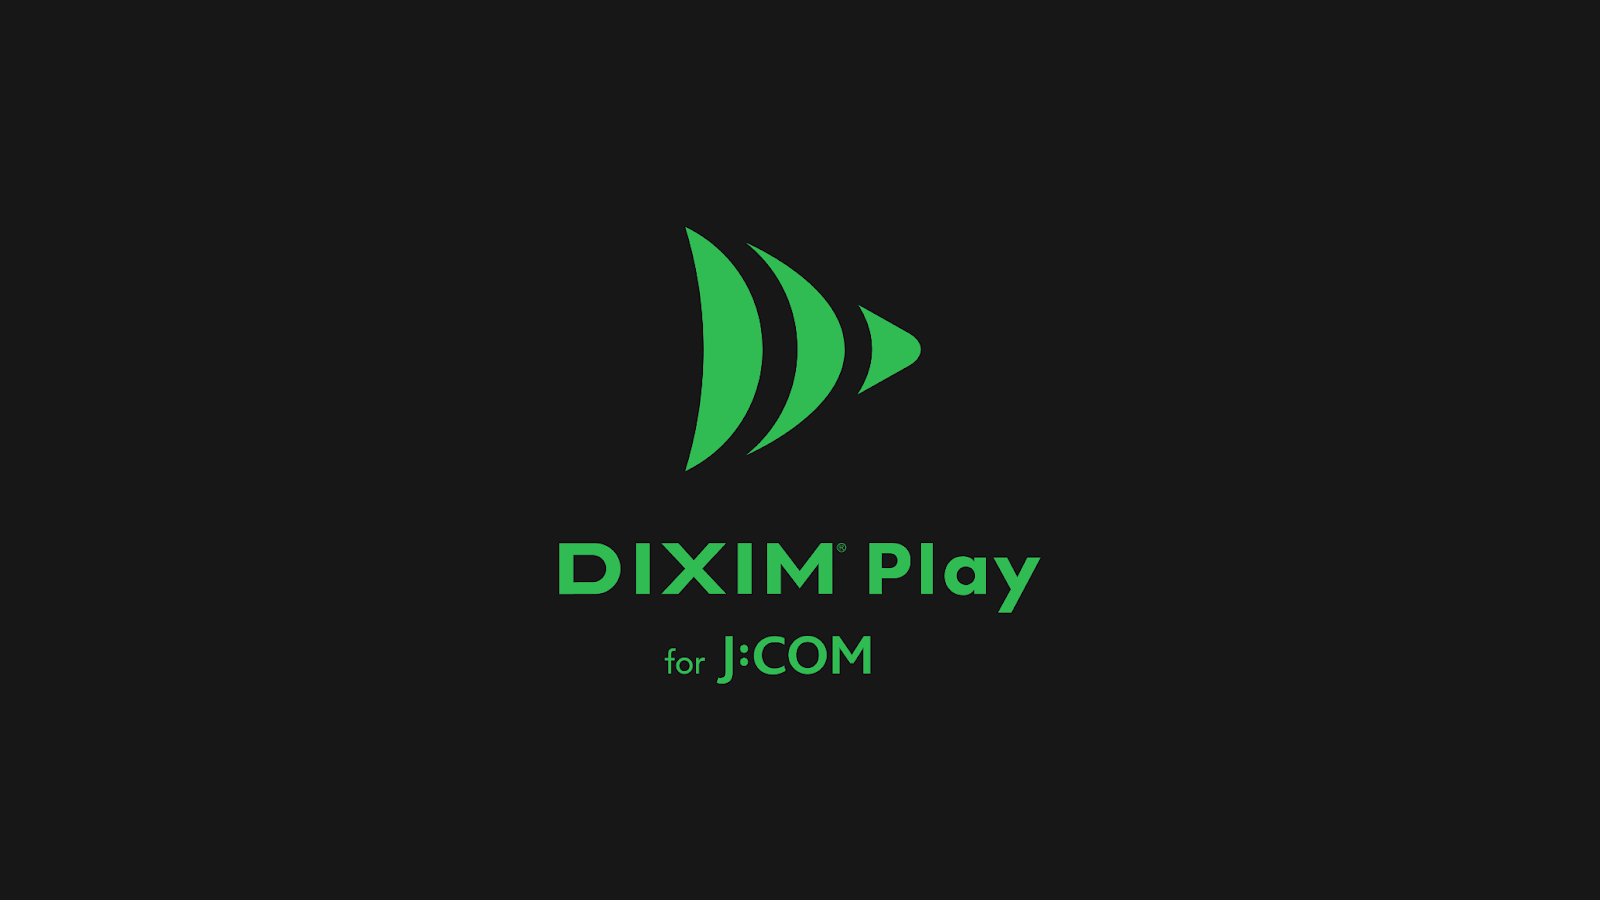 「DiXiM Play for popIn Aladdin」スプラッシュ画面